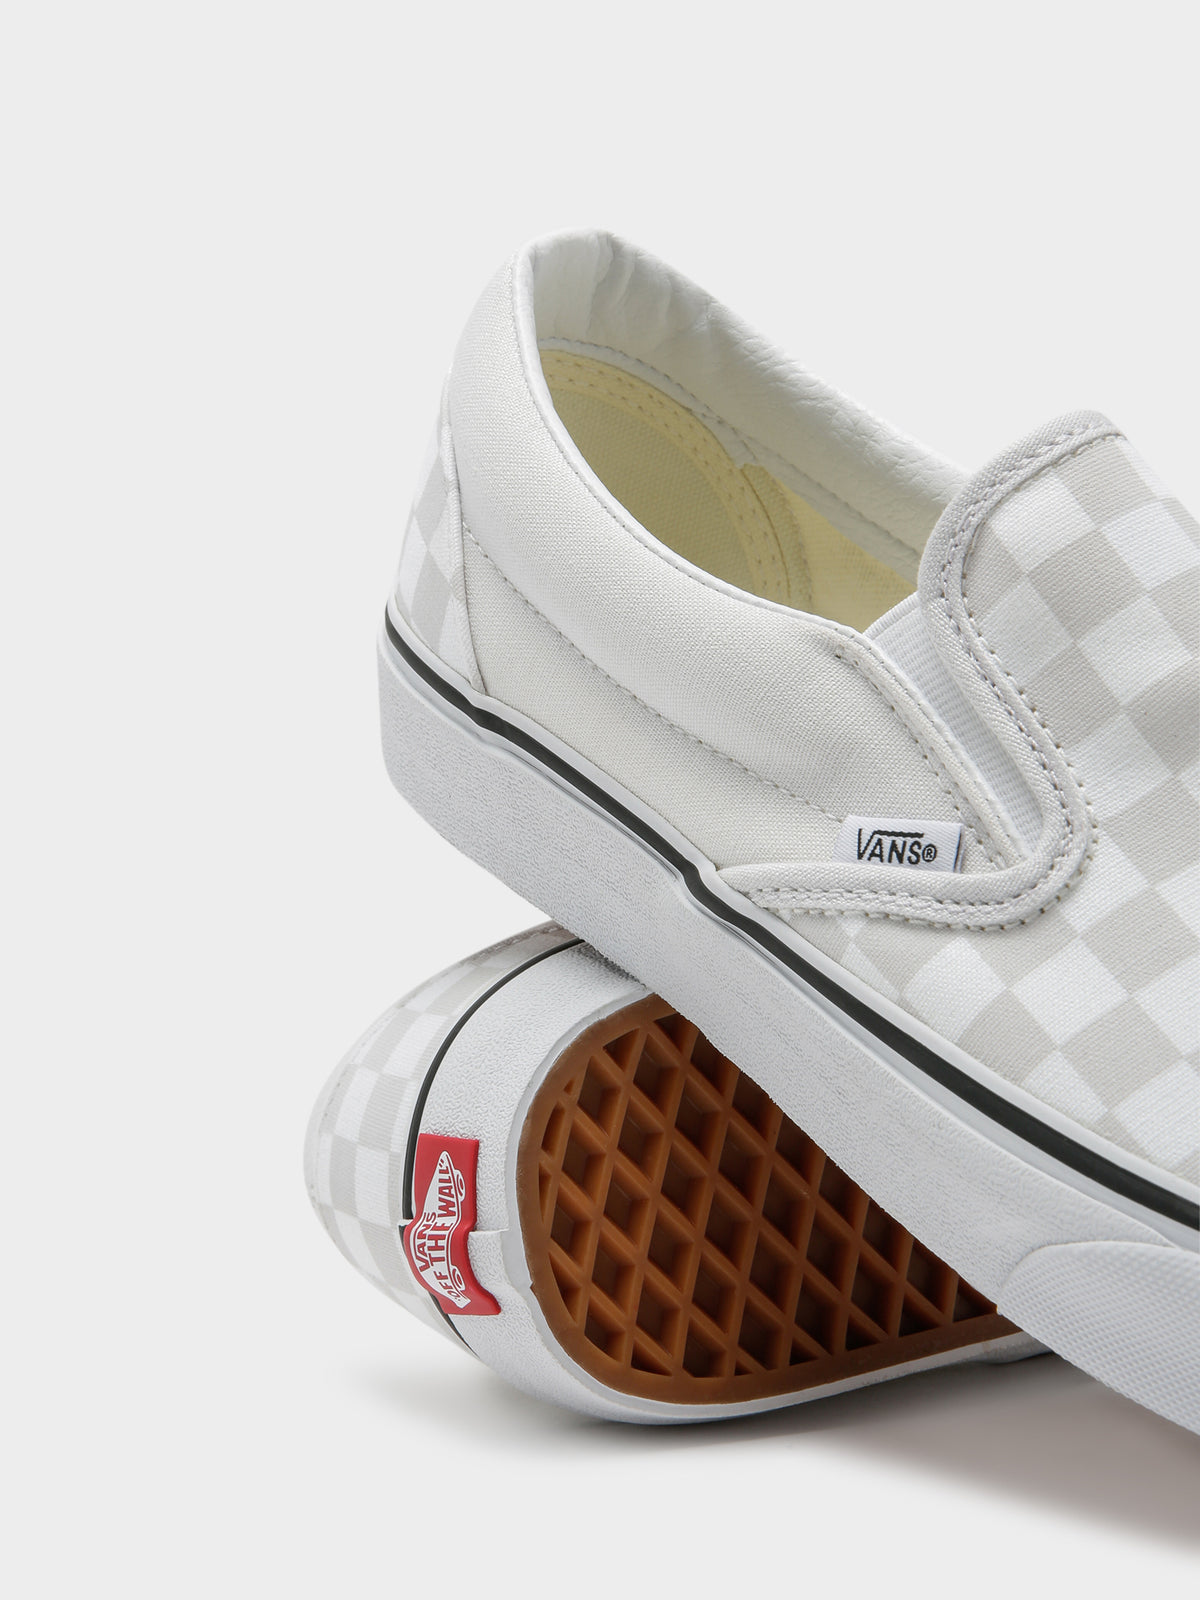 Unisex Classic Slip-On Color Therapy Sneakers in Cream Checkerboard